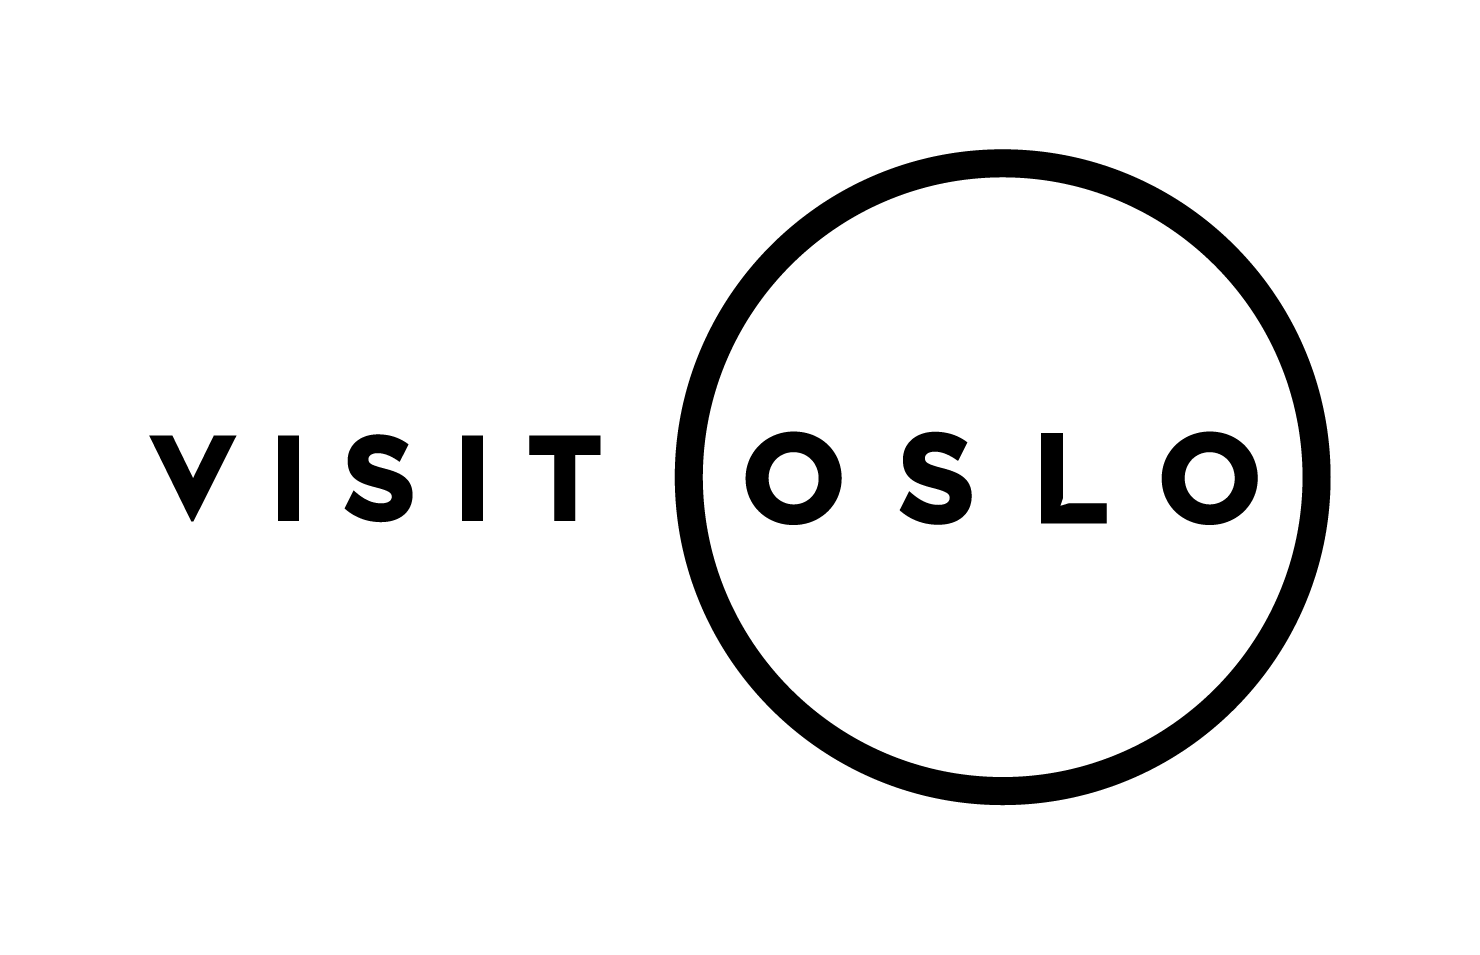 Visit Oslo